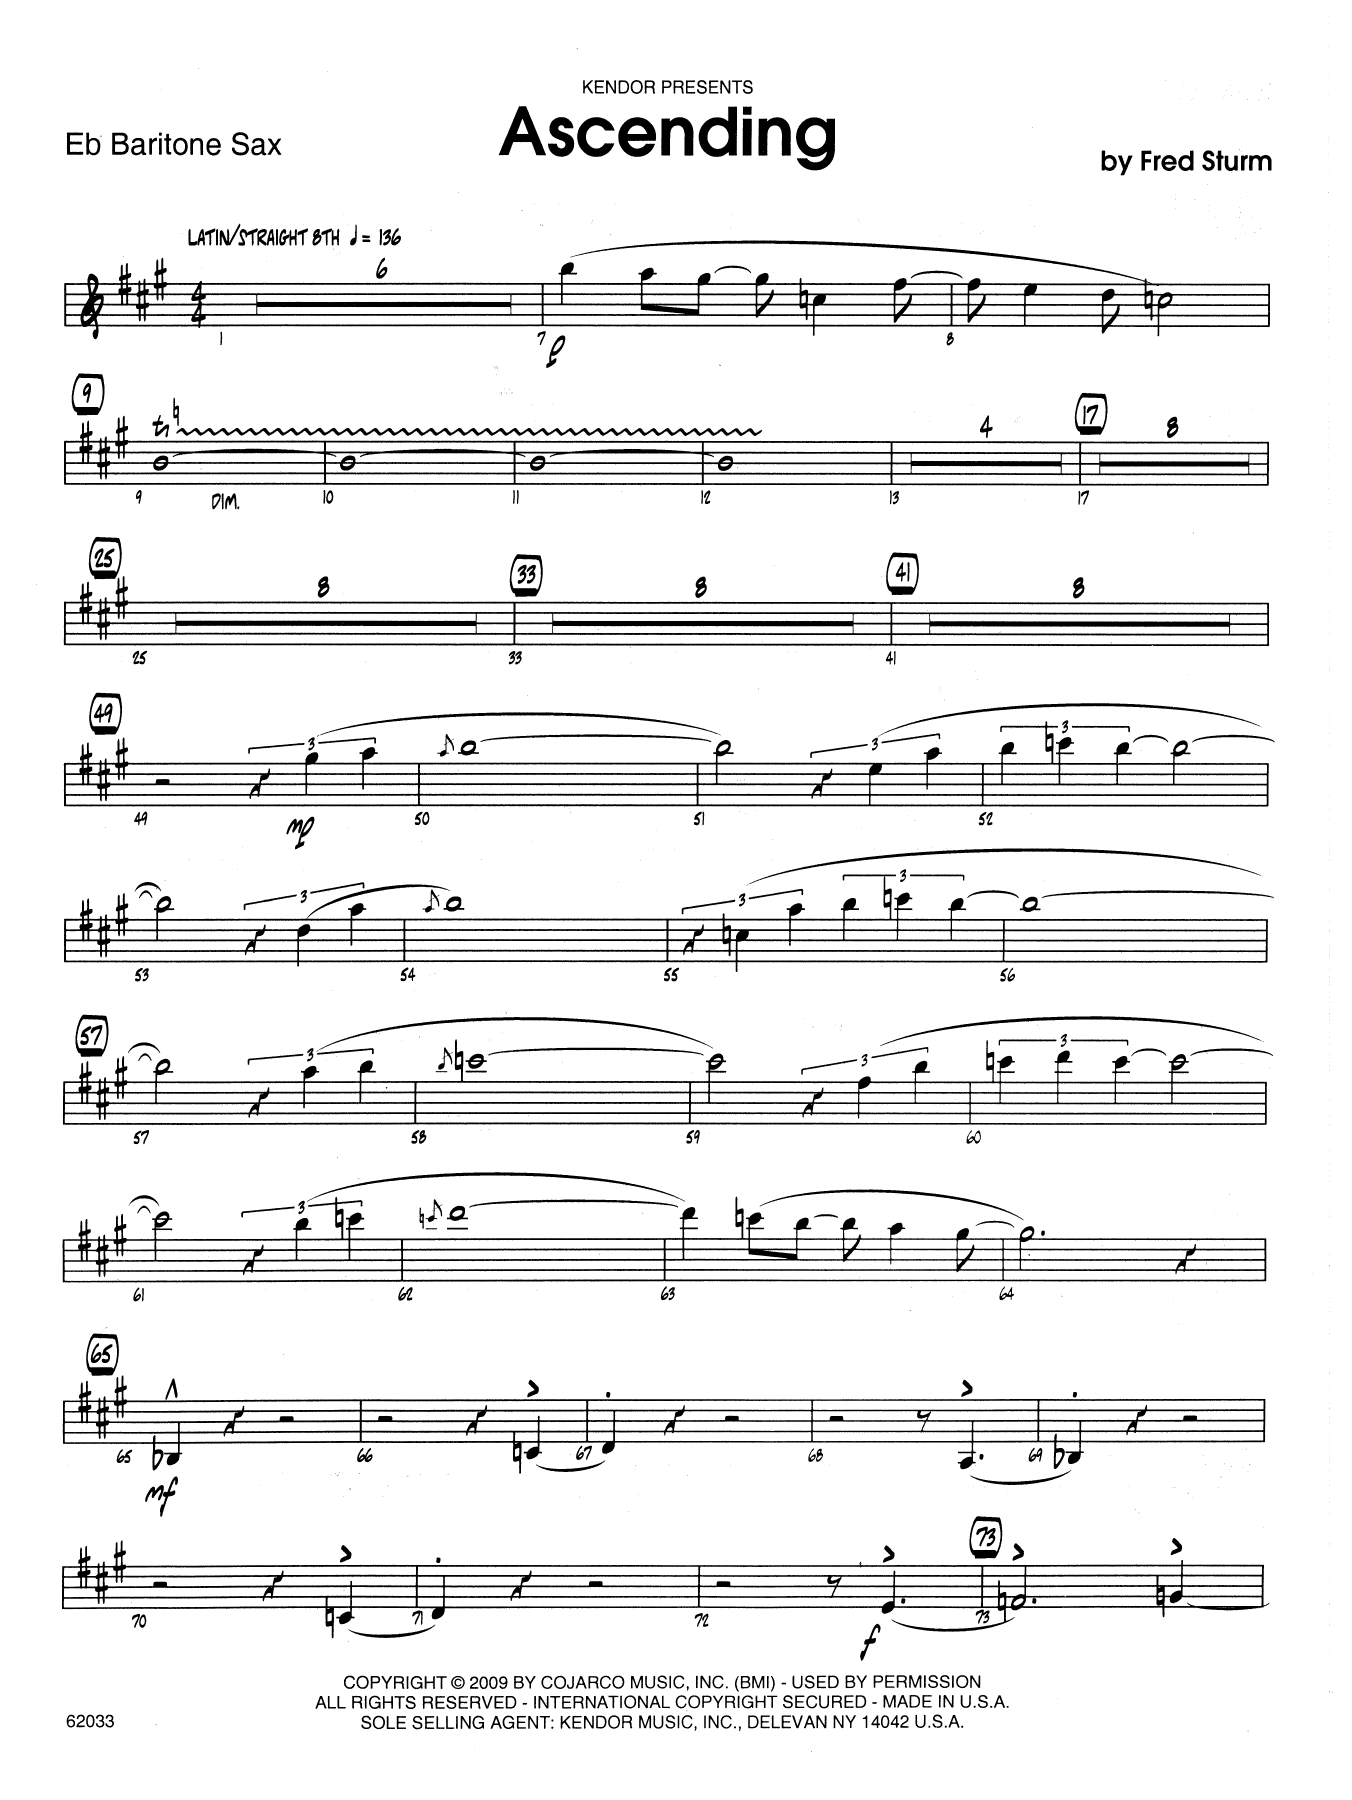 Download Fred Sturm Ascending - Eb Baritone Saxophone Sheet Music